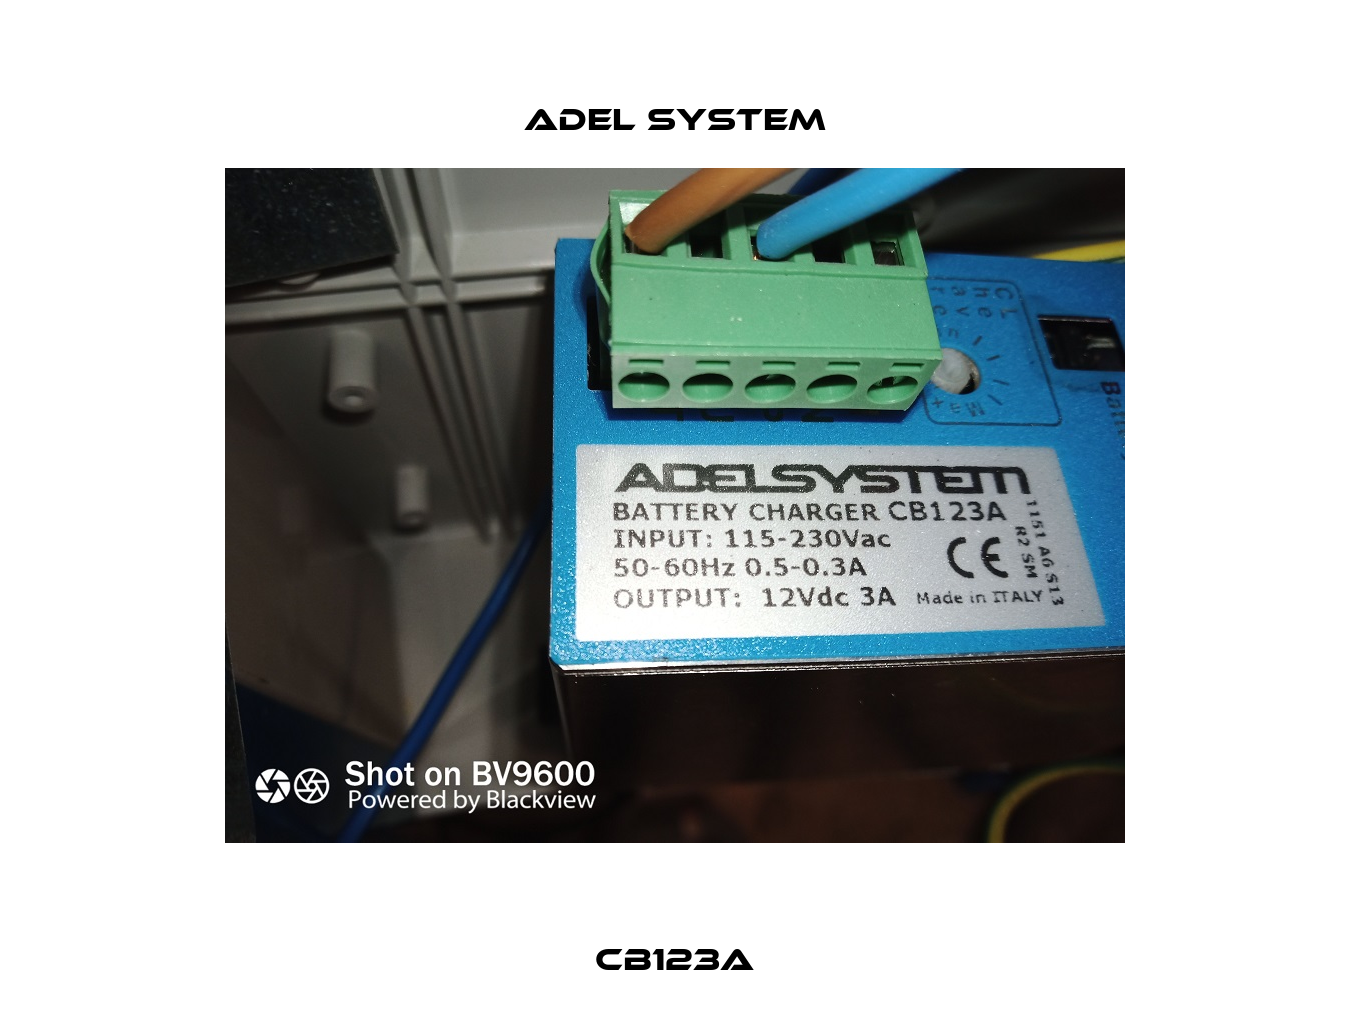 CB123A ADEL System